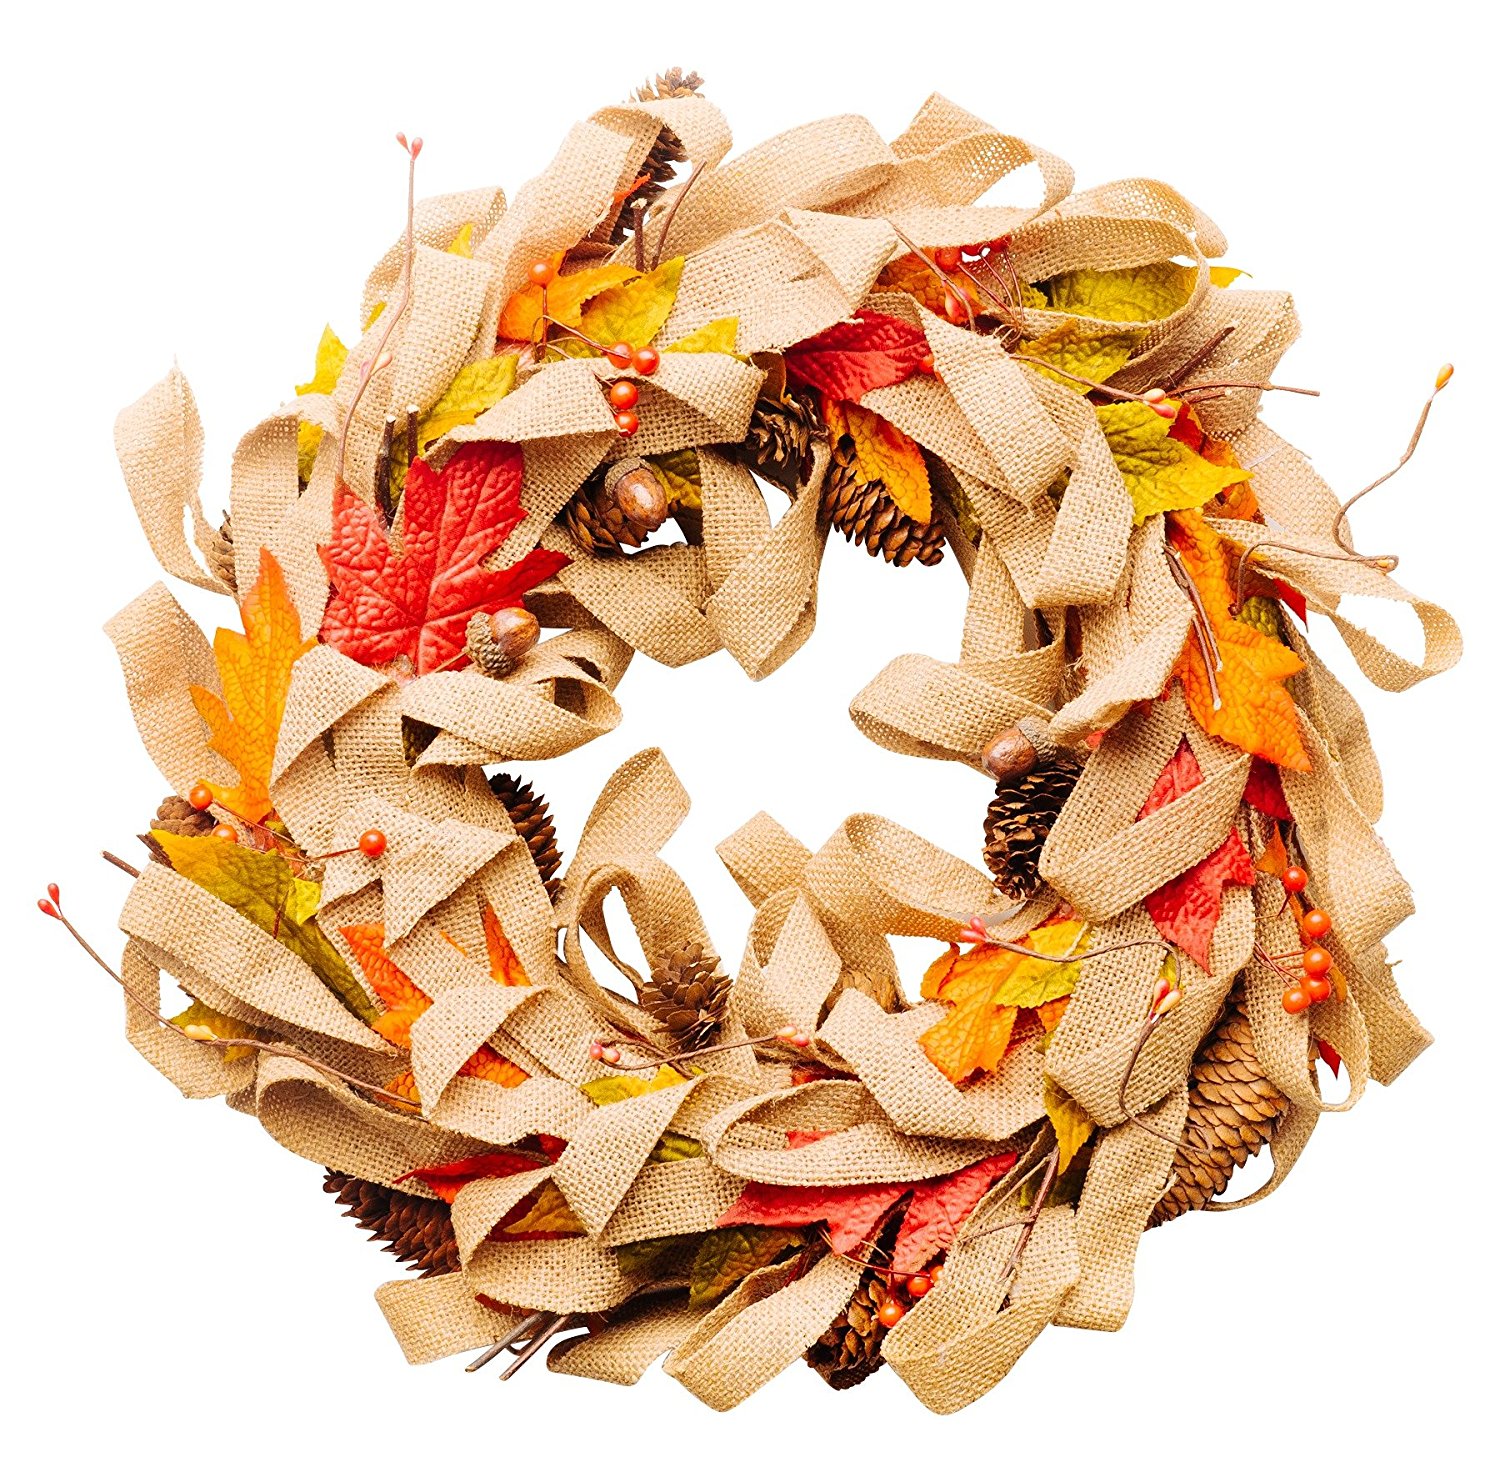 Gorgeous Fall Wreaths: DIY or Buy!